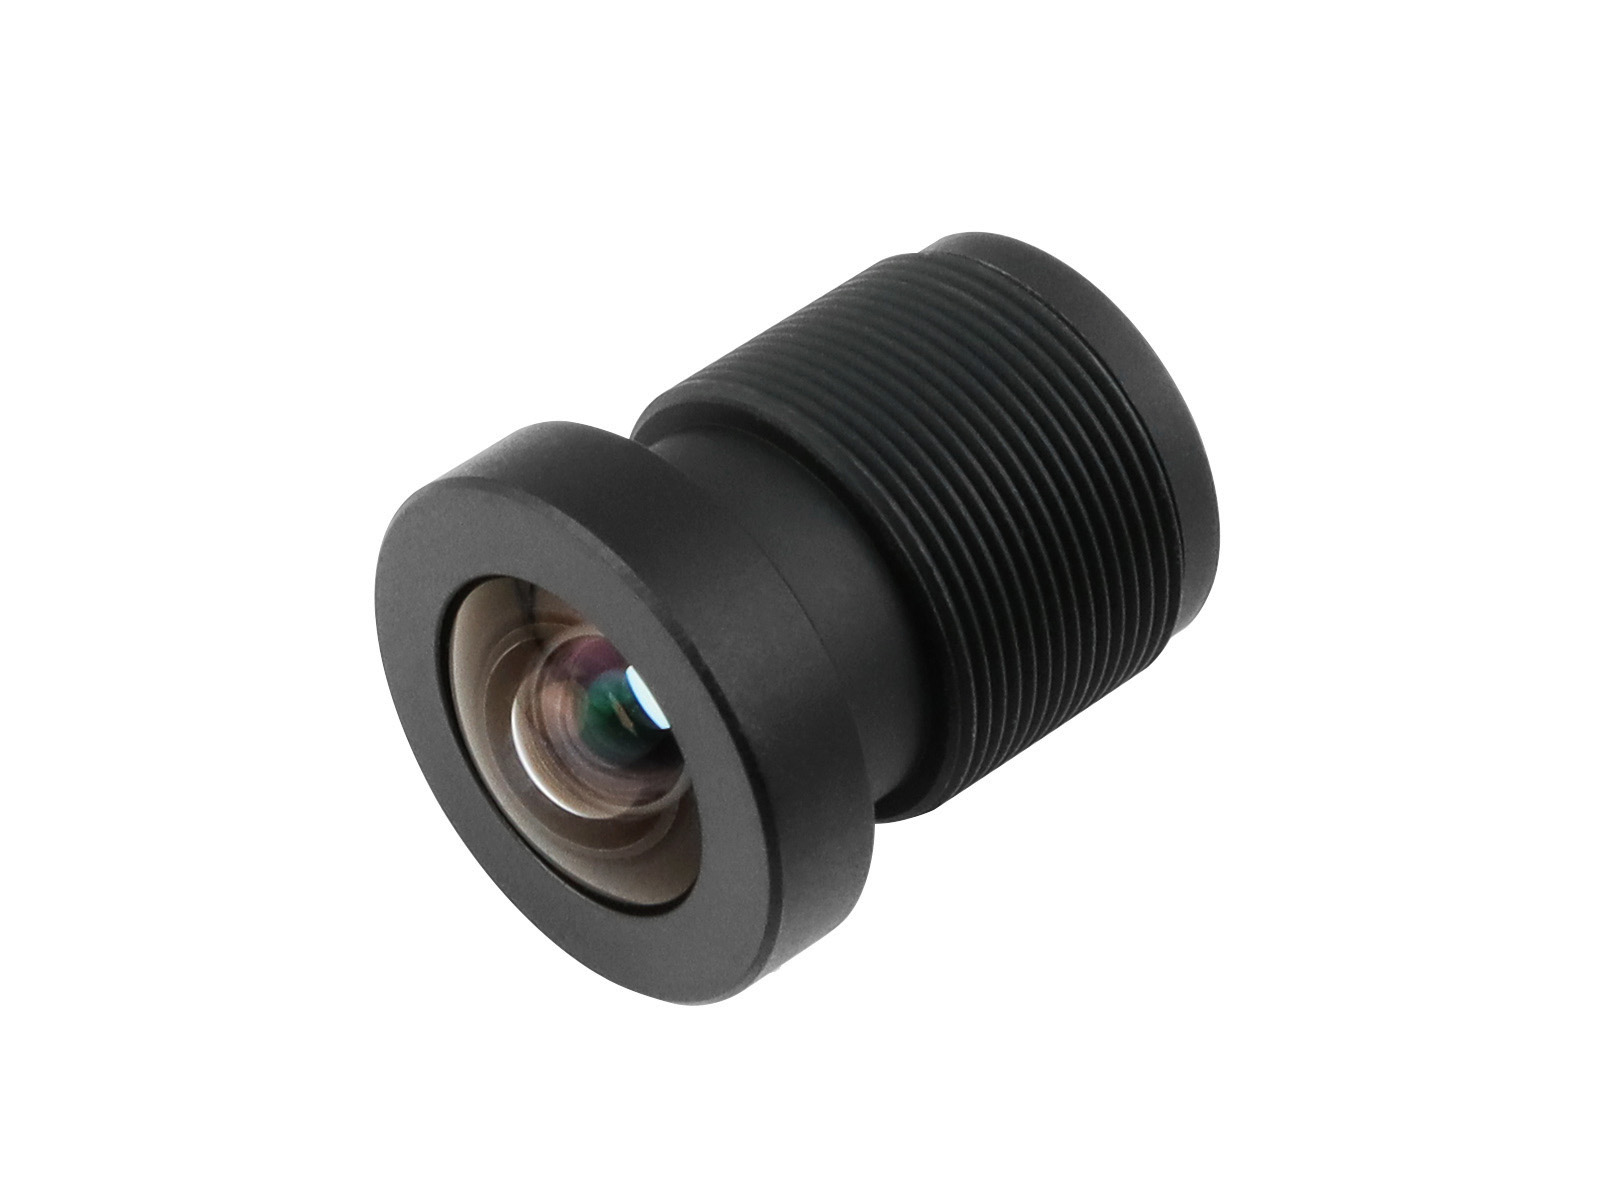 M12高分辨率镜头 1600万高清分辨率 105°大视场角 3.56mm焦距 兼容Raspberry Pi HQ Camera M12